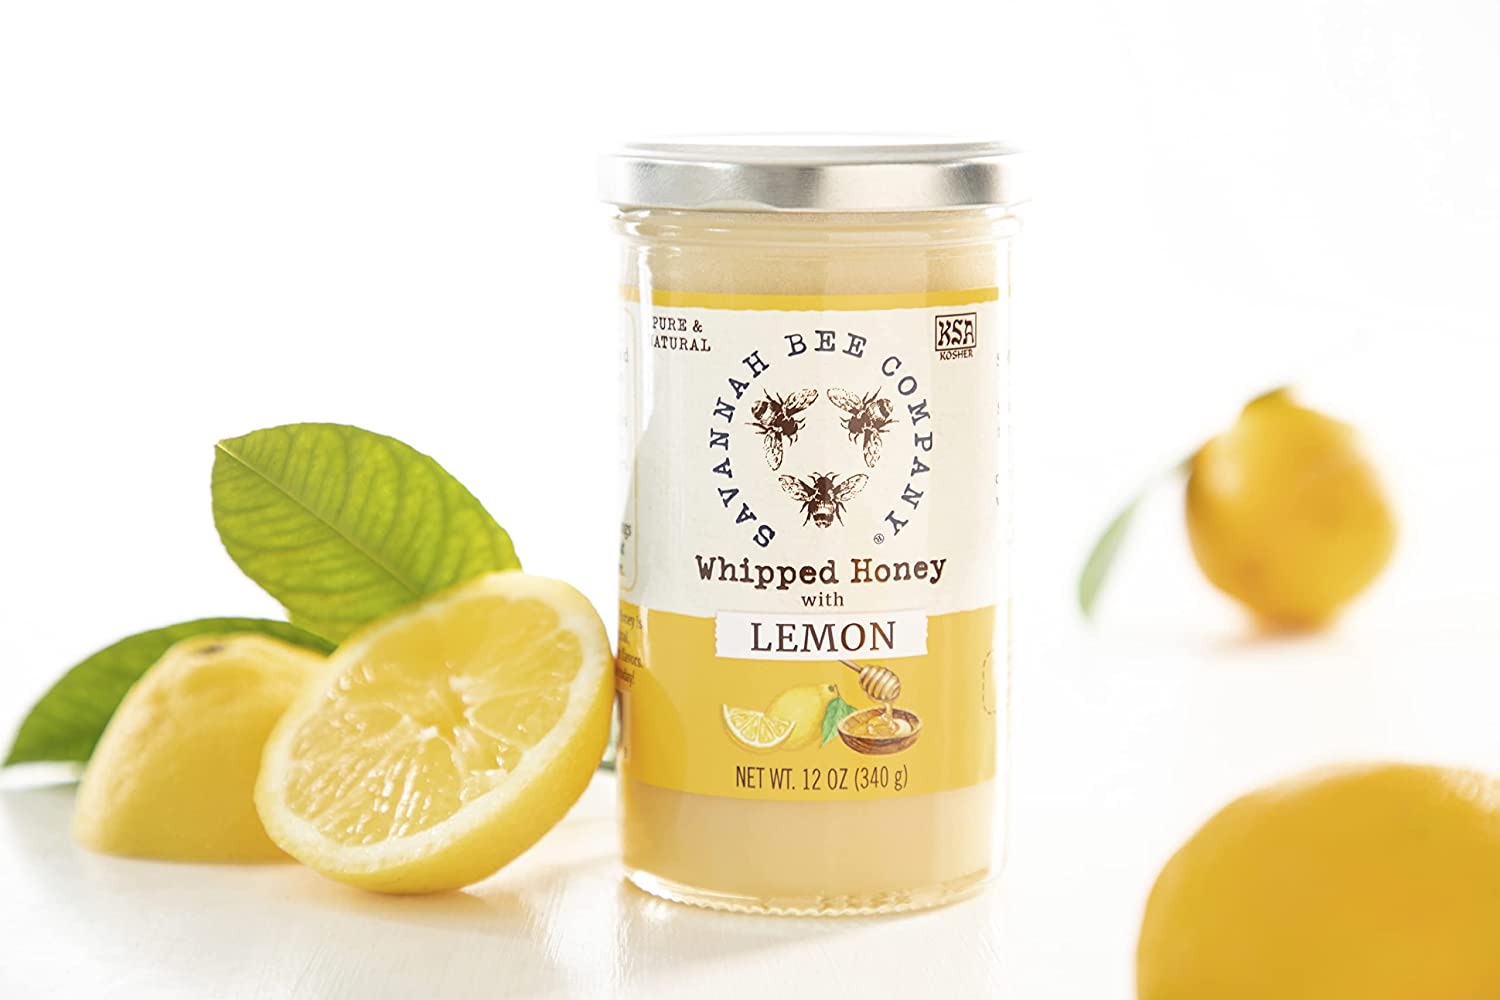 Whipped Honey with Lemon